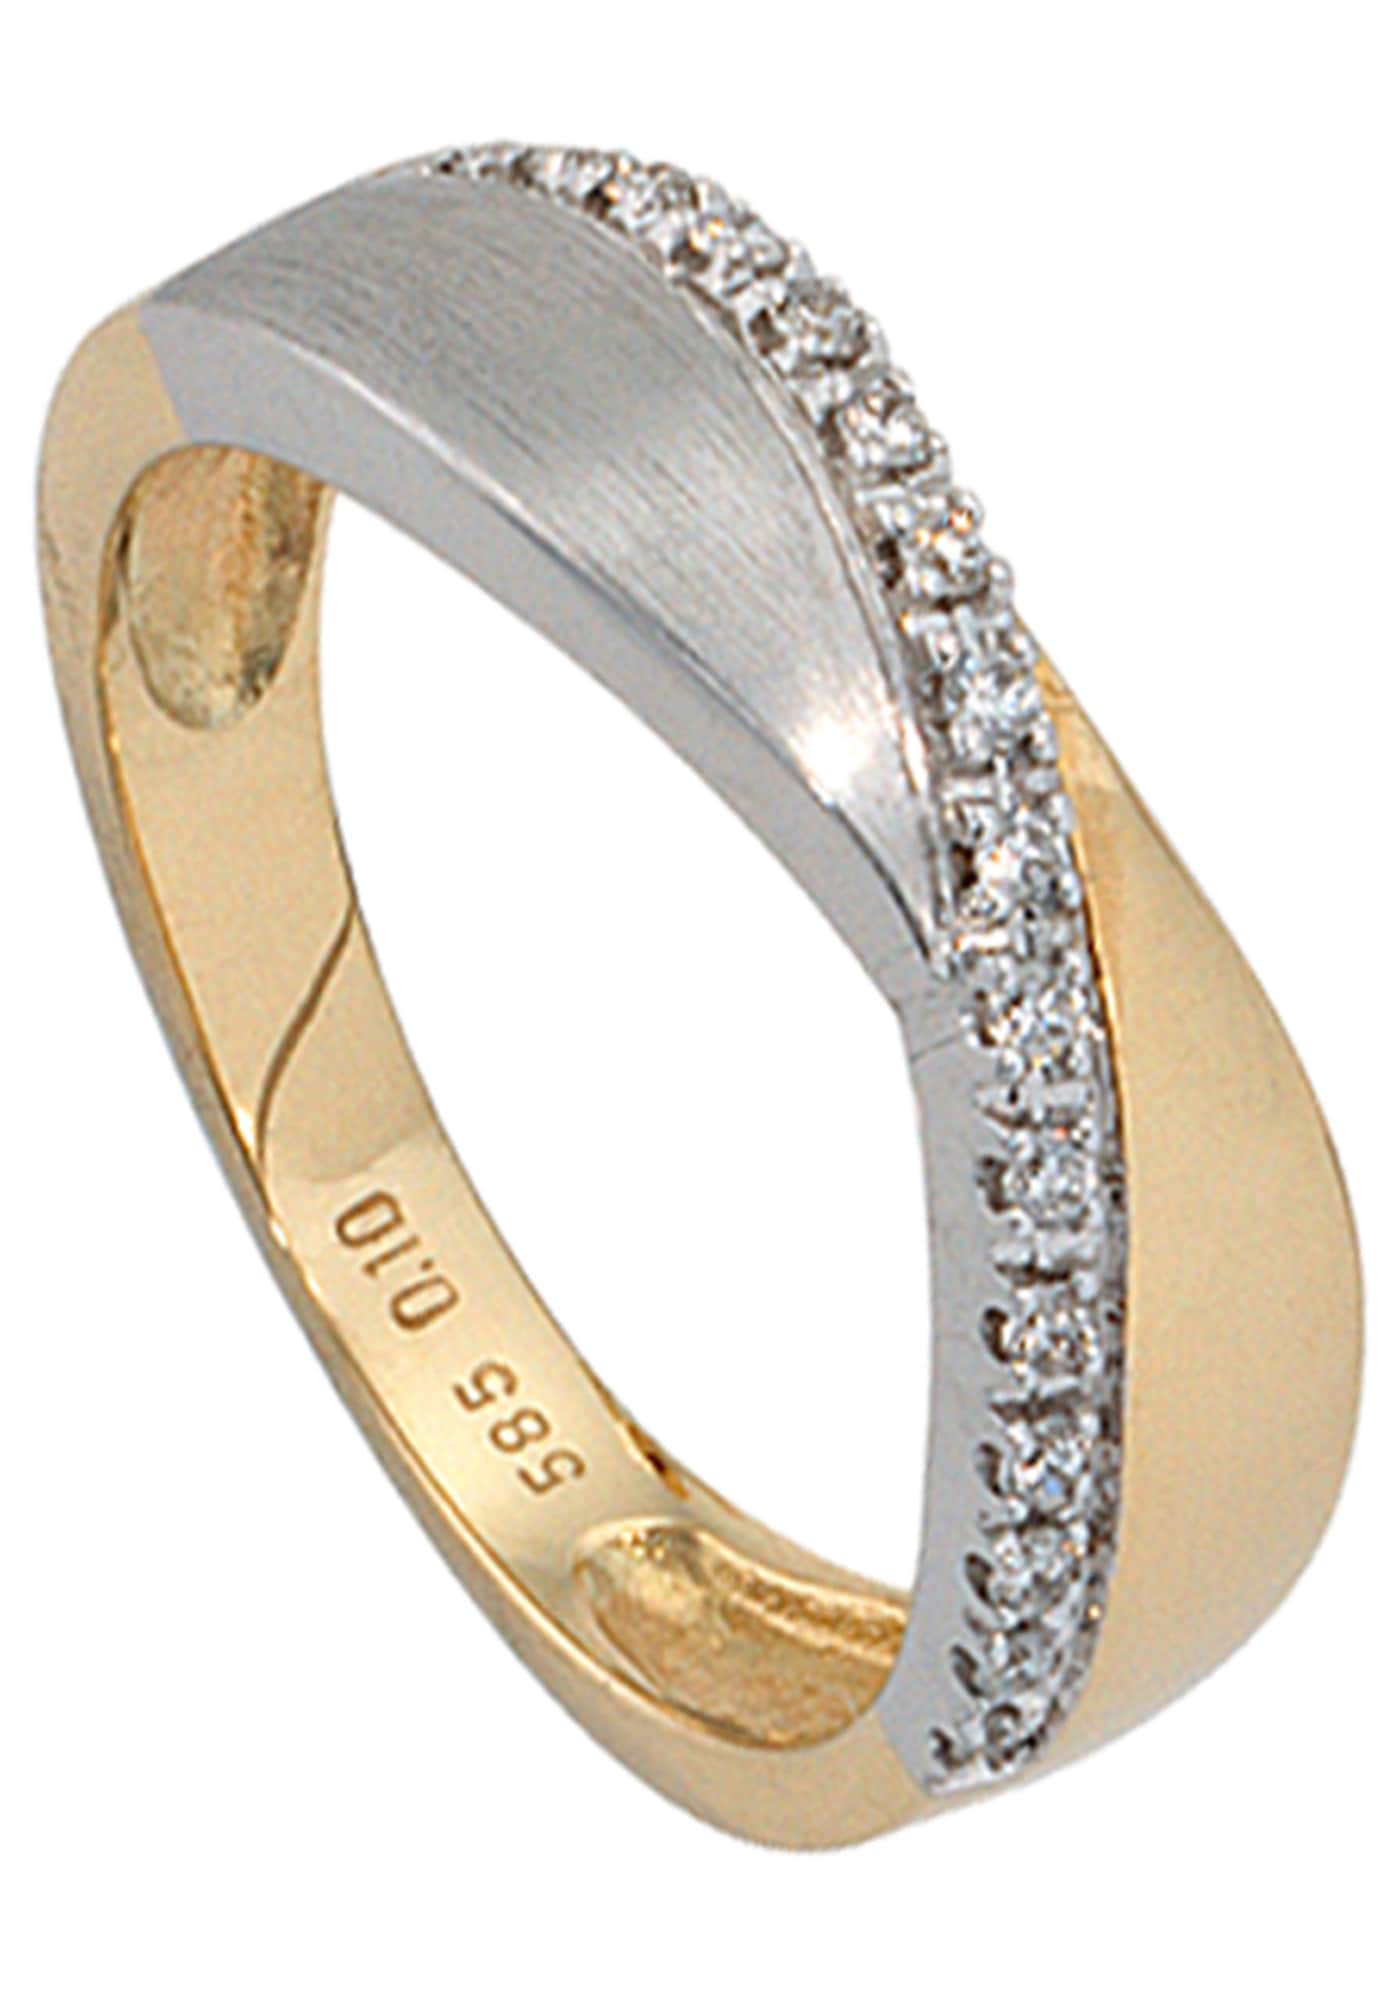 JOBO Diamantring, 585 Gold bicolor mit 16 Diamanten kaufen | BAUR